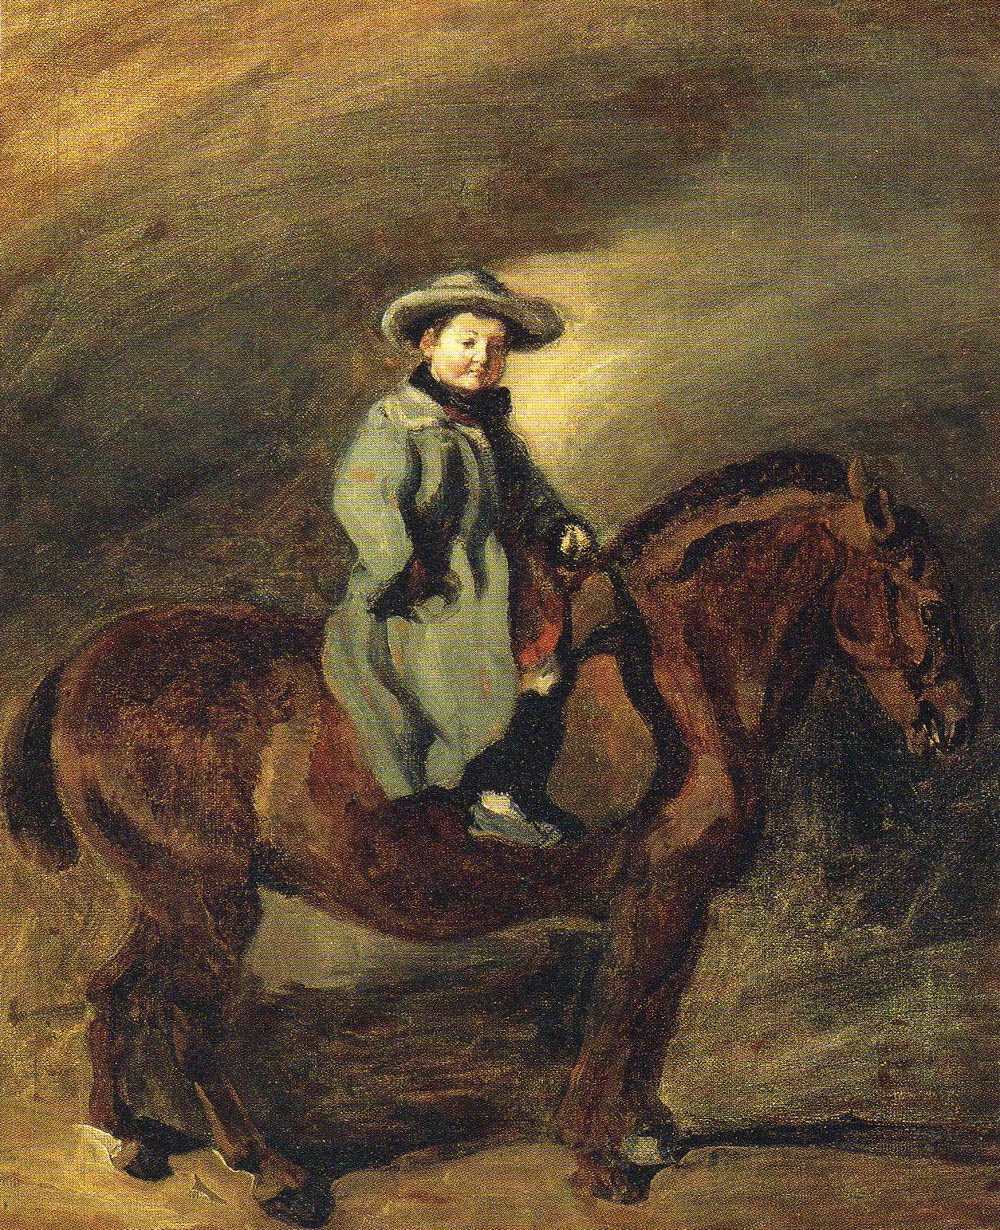 Artist's Son on a Donkey